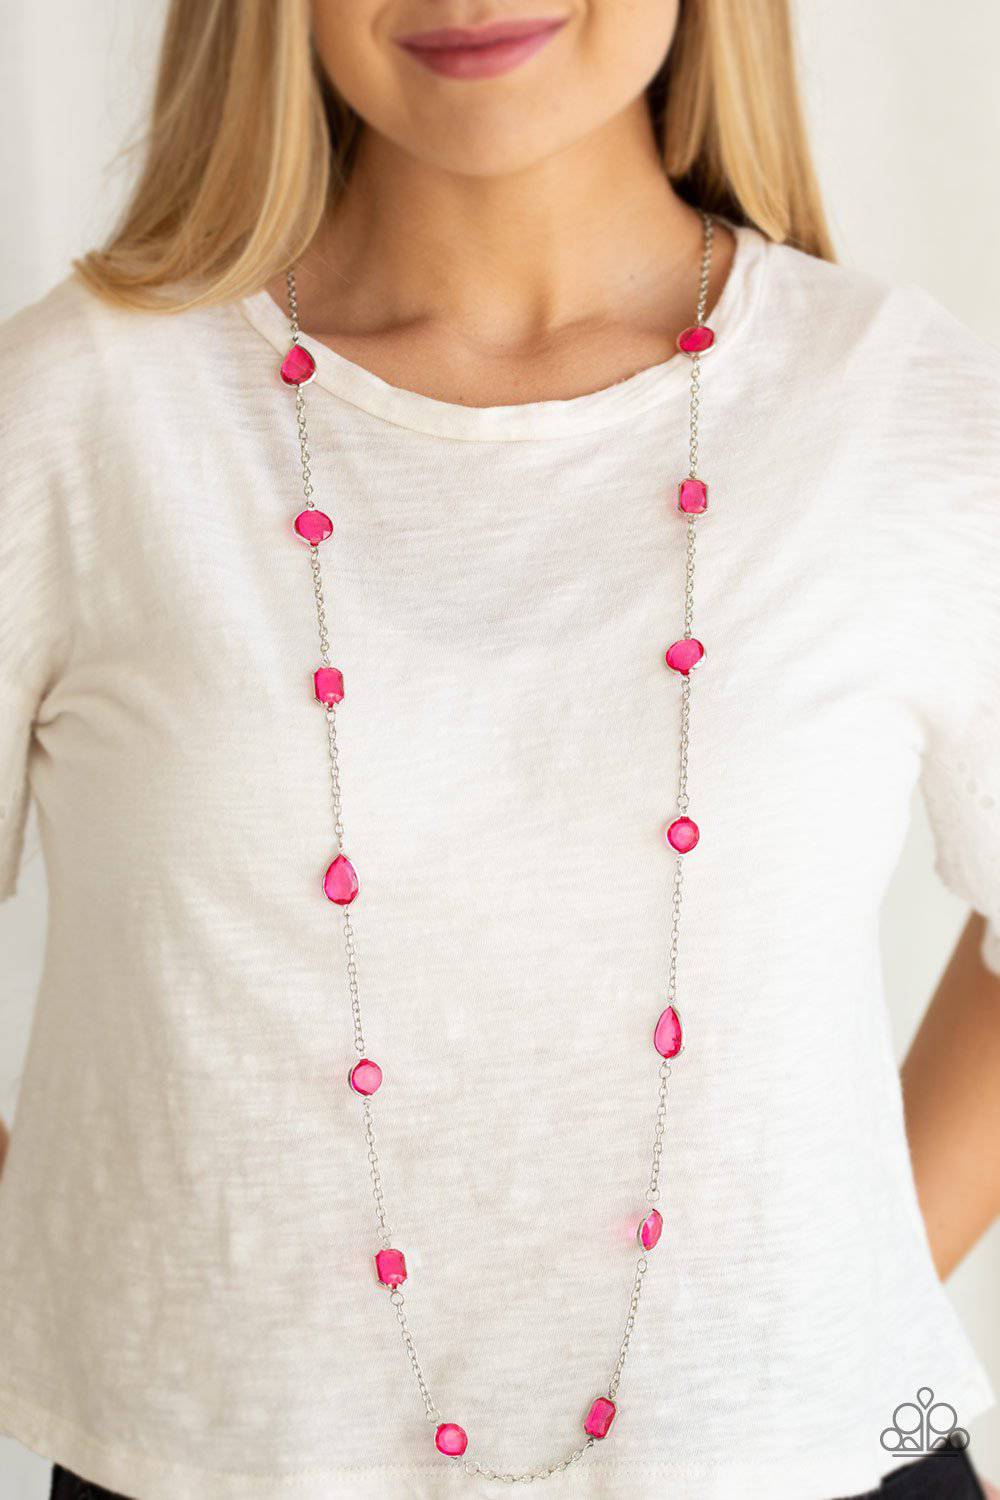 Glassy Glamorous - Glassy Pink Gemstones Necklace - Paparazzi Accessories - GlaMarous Titi Jewels